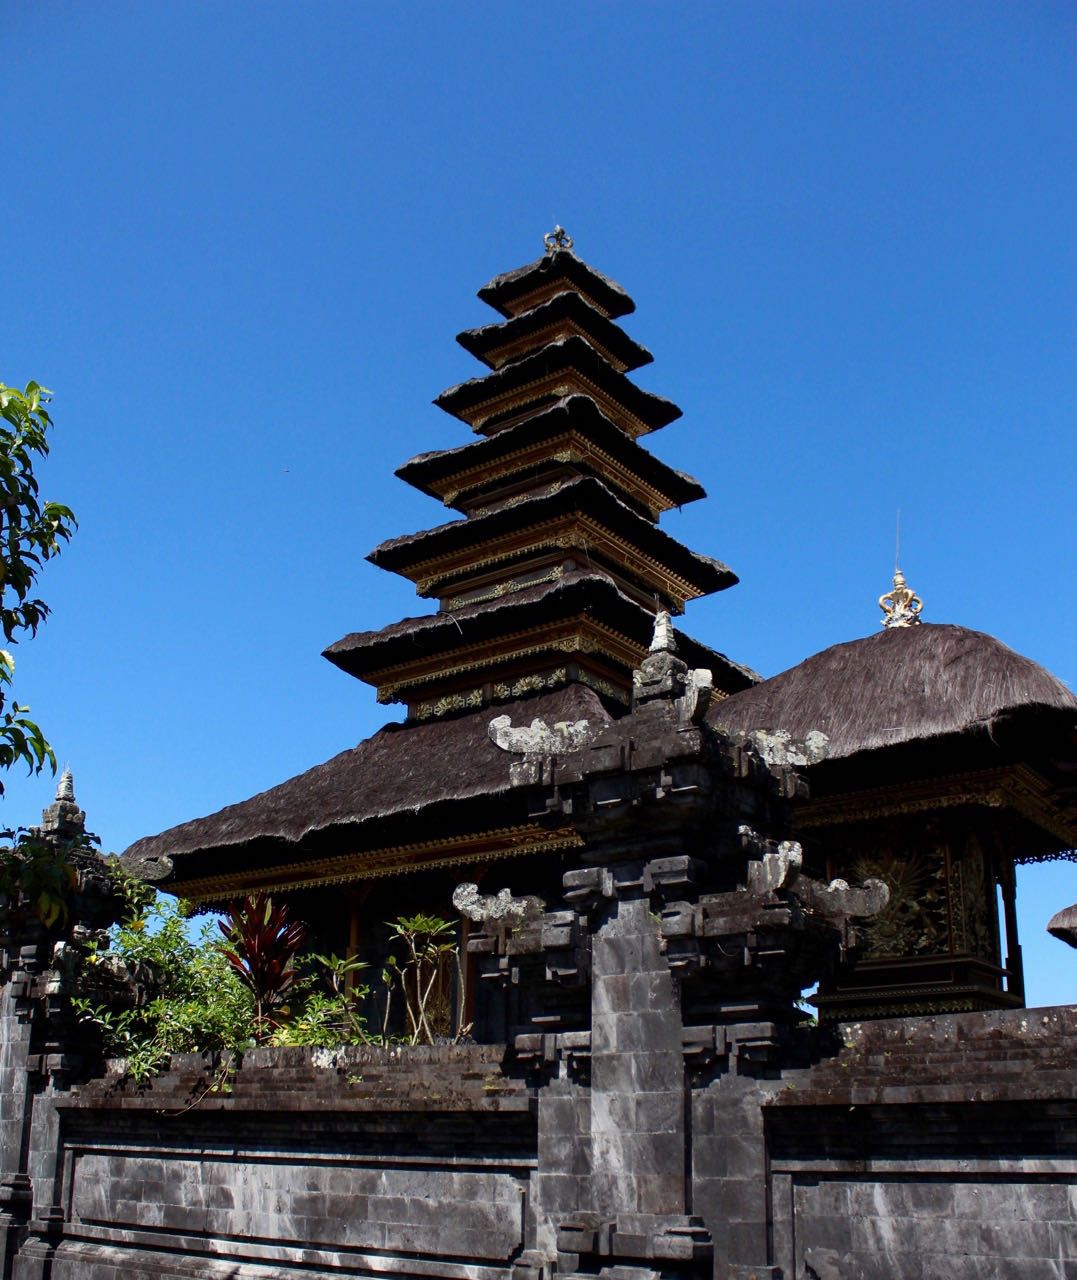 My one week in Bali